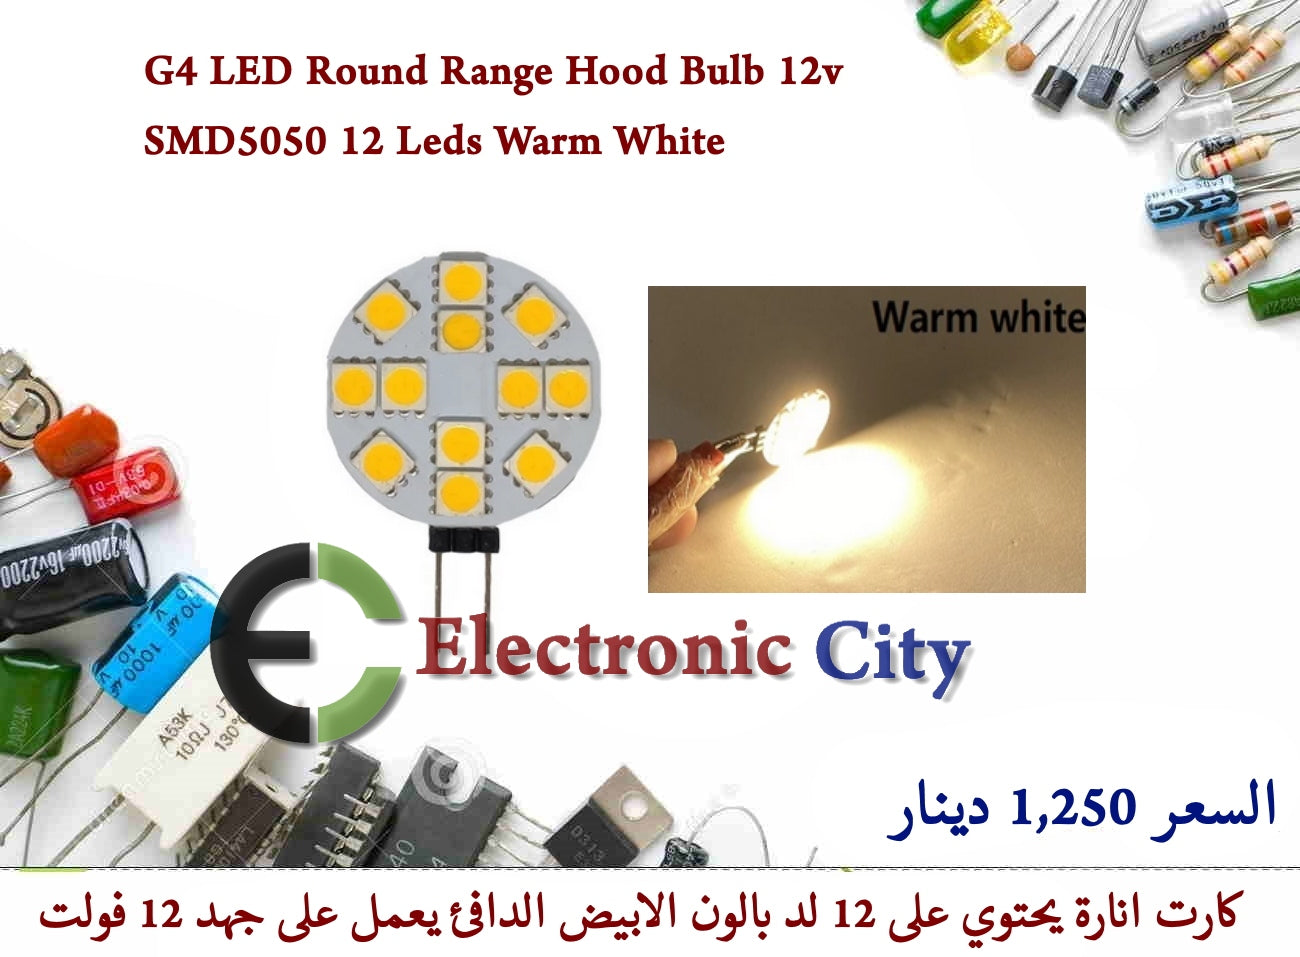 G4 LED Round Range Hood Bulb 12v SMD5050 12 Leds Warm White